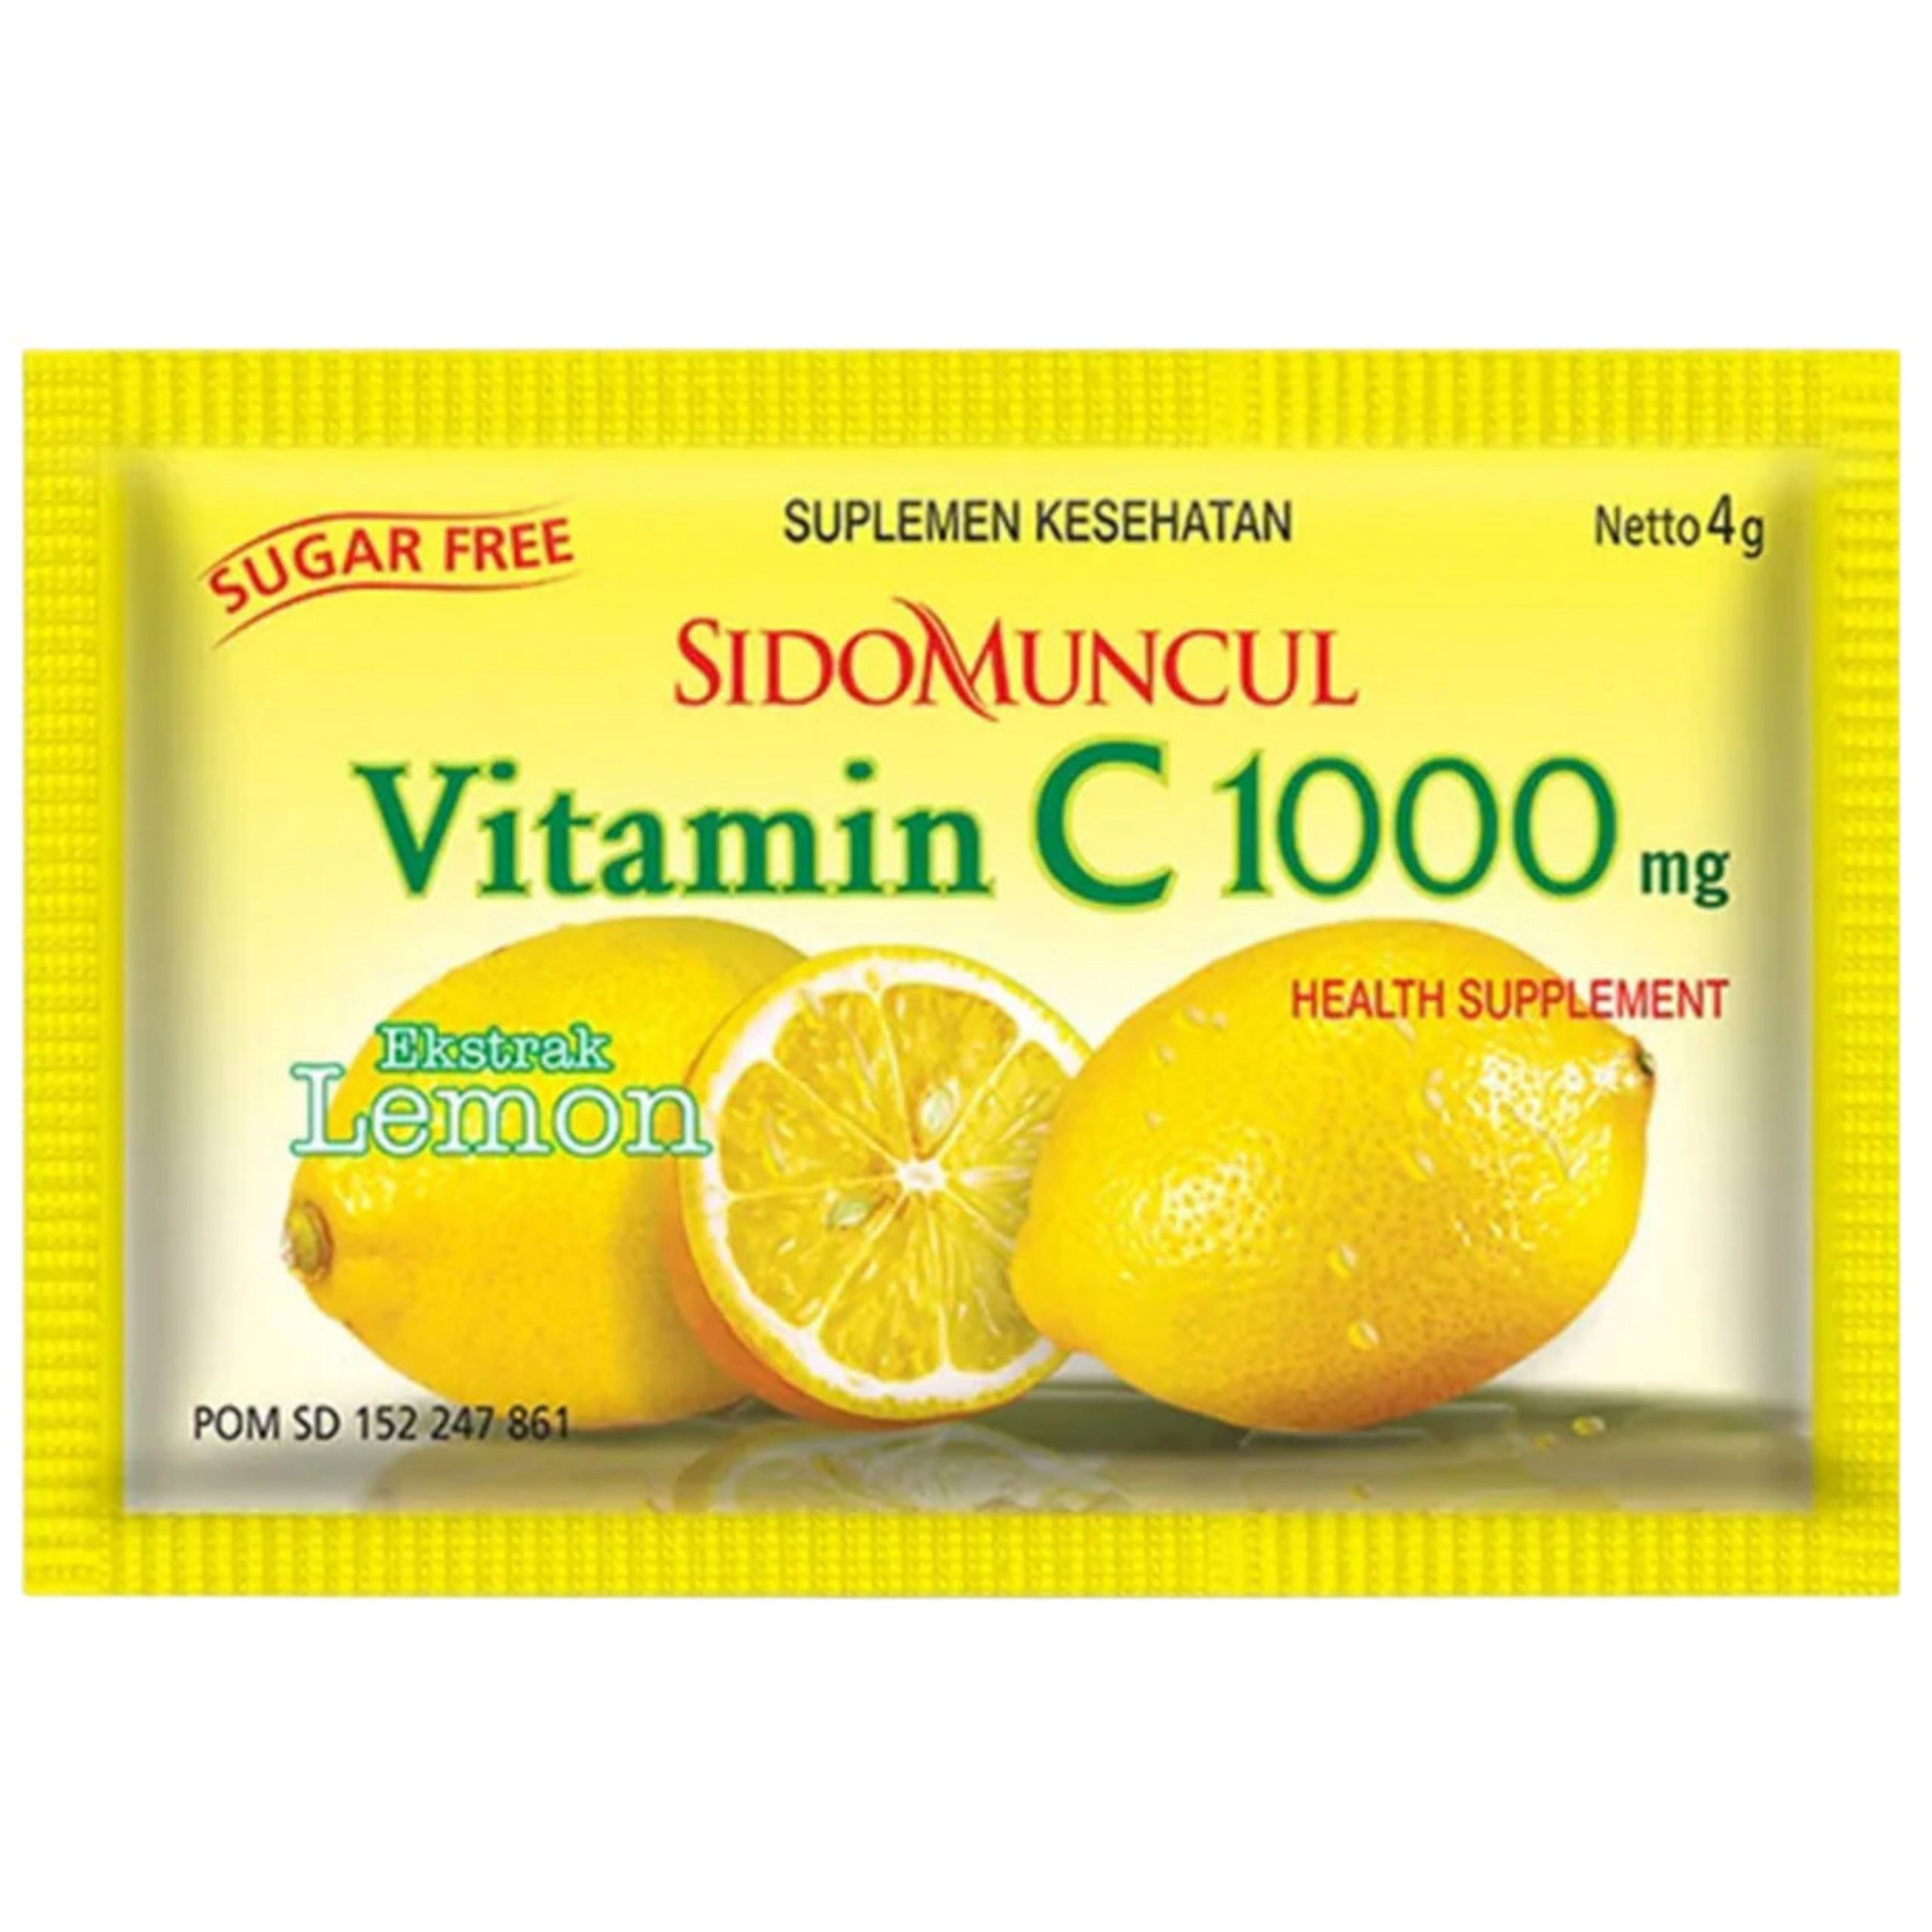 Manfaat vitamin c 1000 sidomuncul